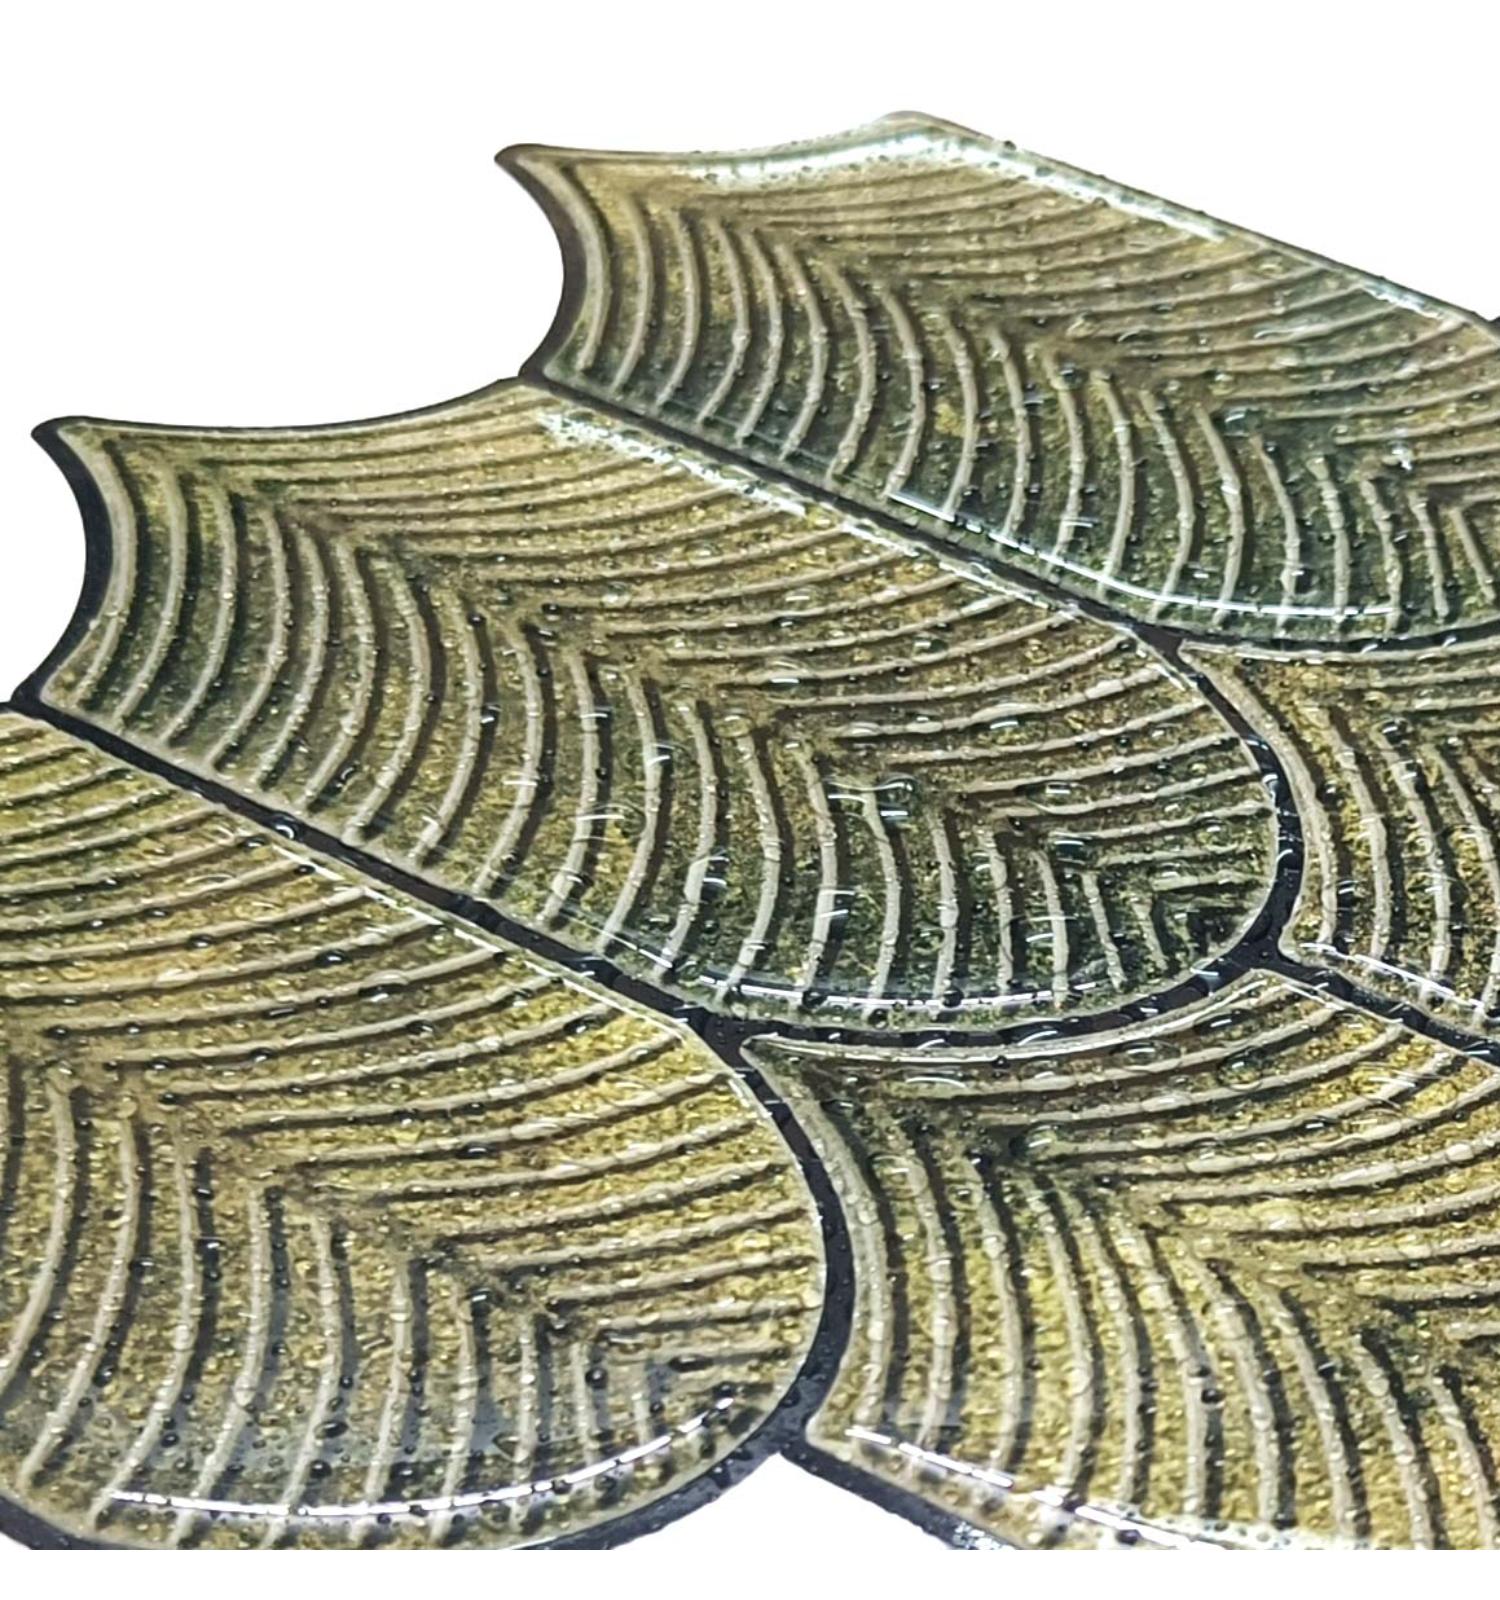 3D Peel and Stick Olive Green Tiles | self Adhesive Peel & Stick Backsplash tiles for Home Décor